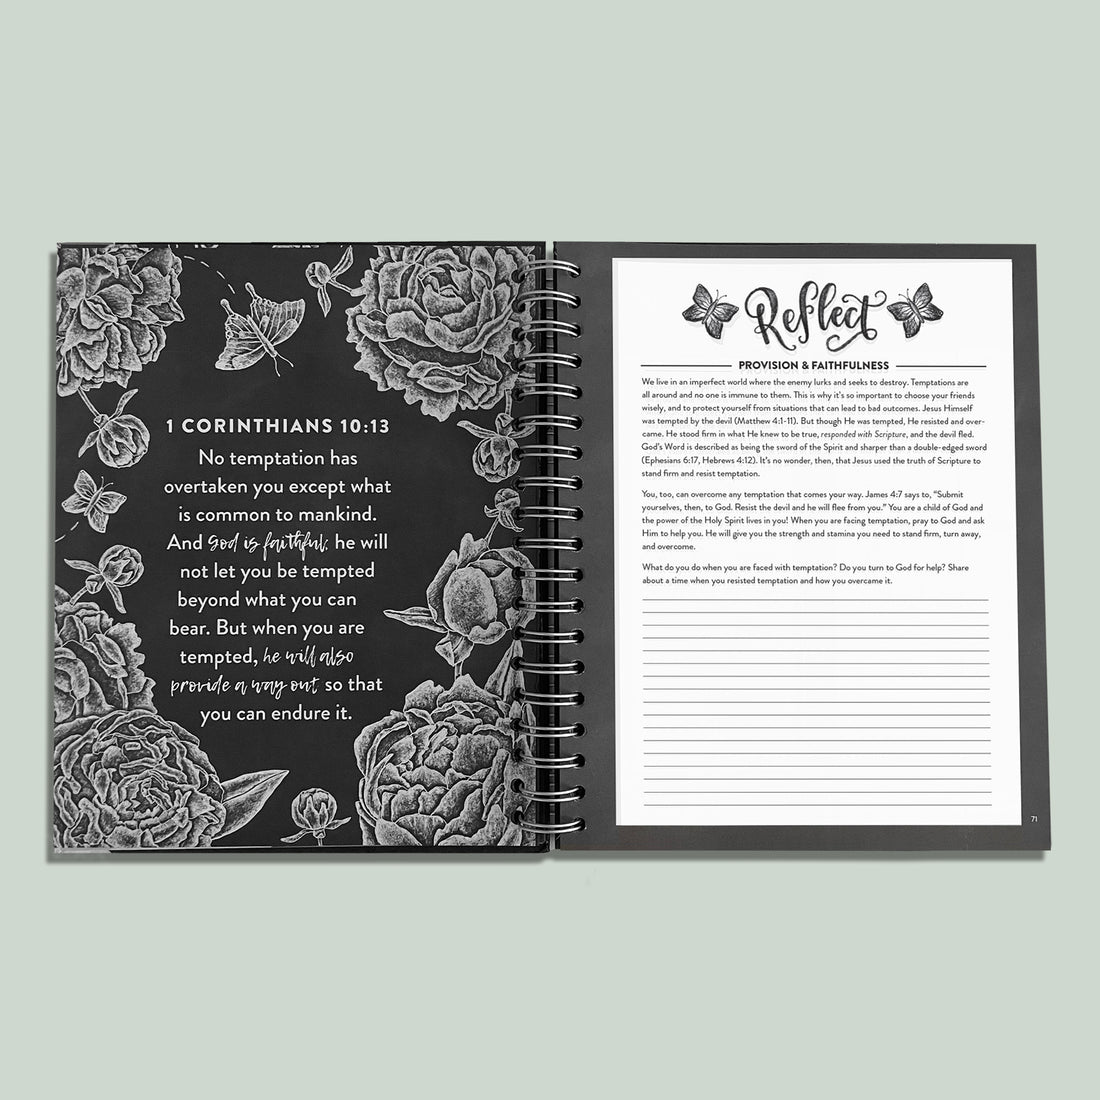 Prayer Journal For Teen Girls by Shannon Roberts